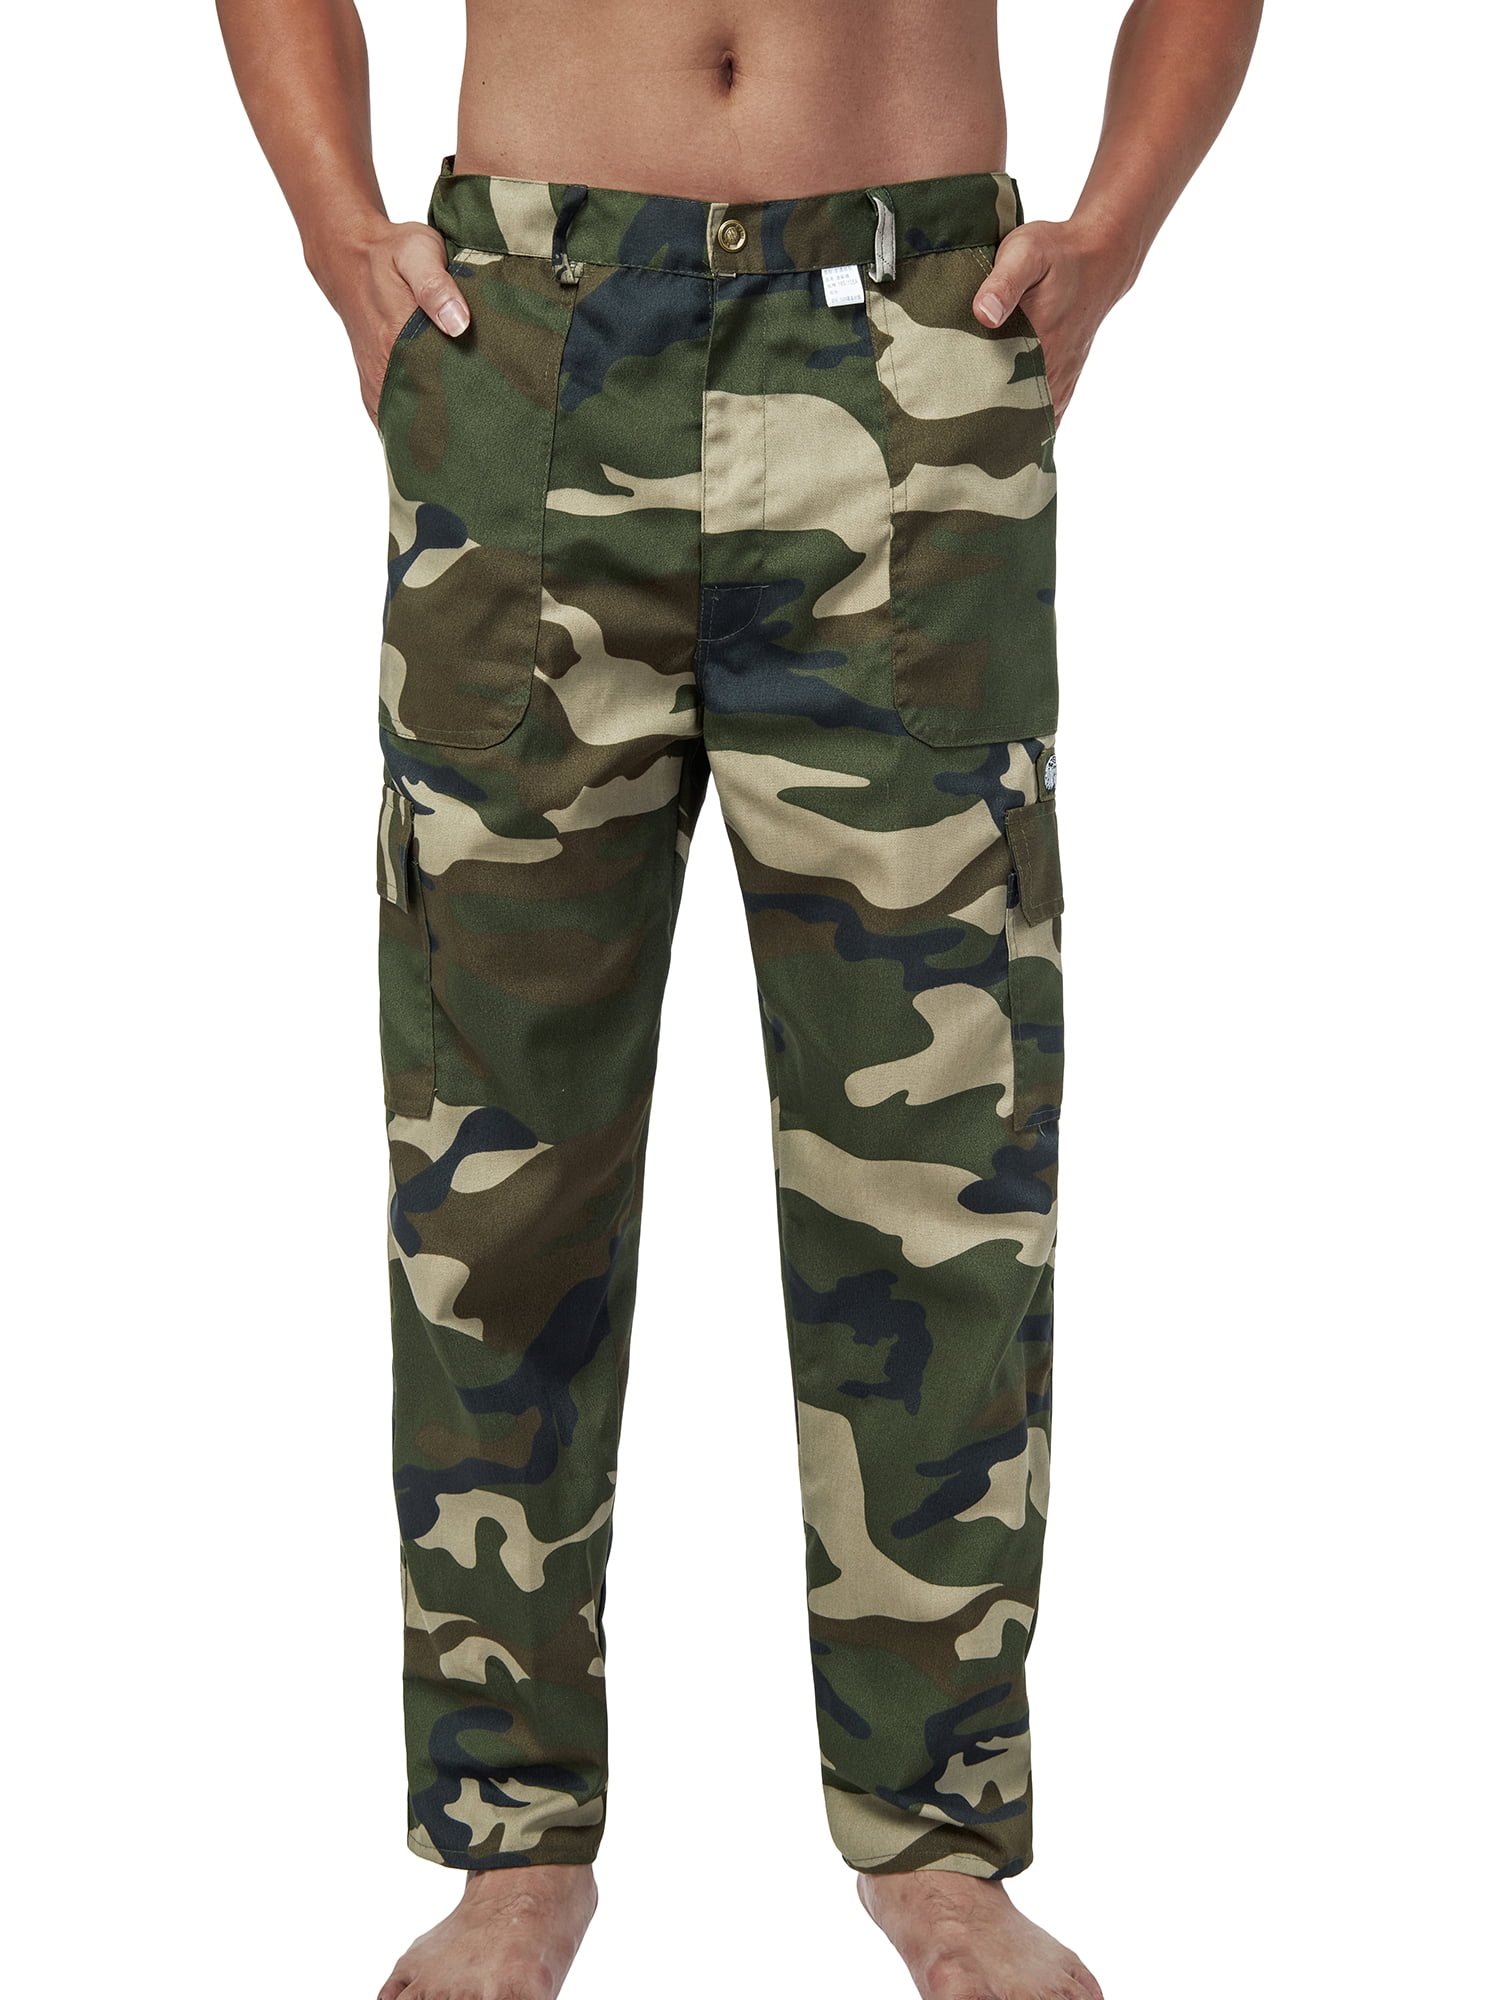 FALEXO Men's Pants Camo Military Long Pants Hunting Loose Print Multi ...